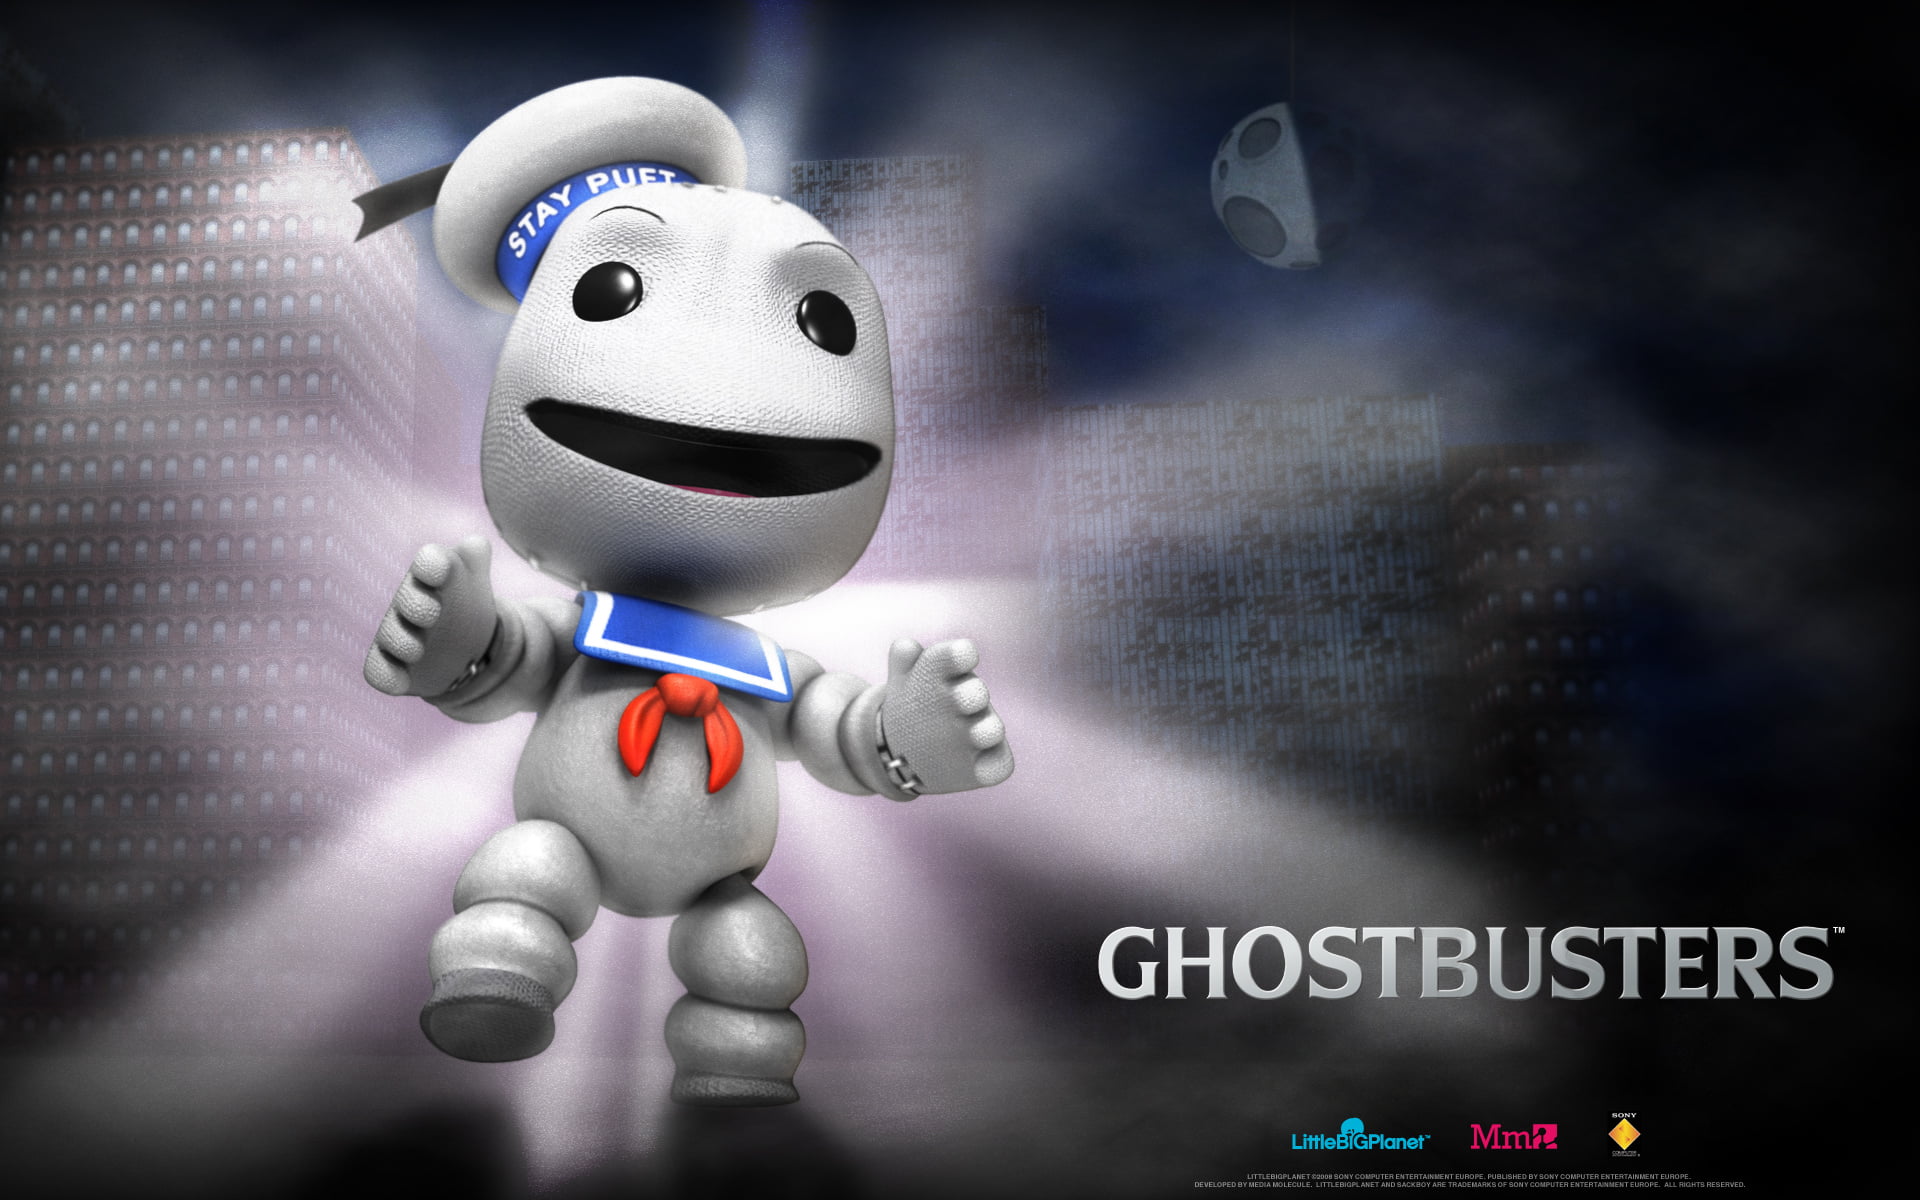 LittleBigPlanet - Ghost Busters, Ghostbusters wallpaper, Games